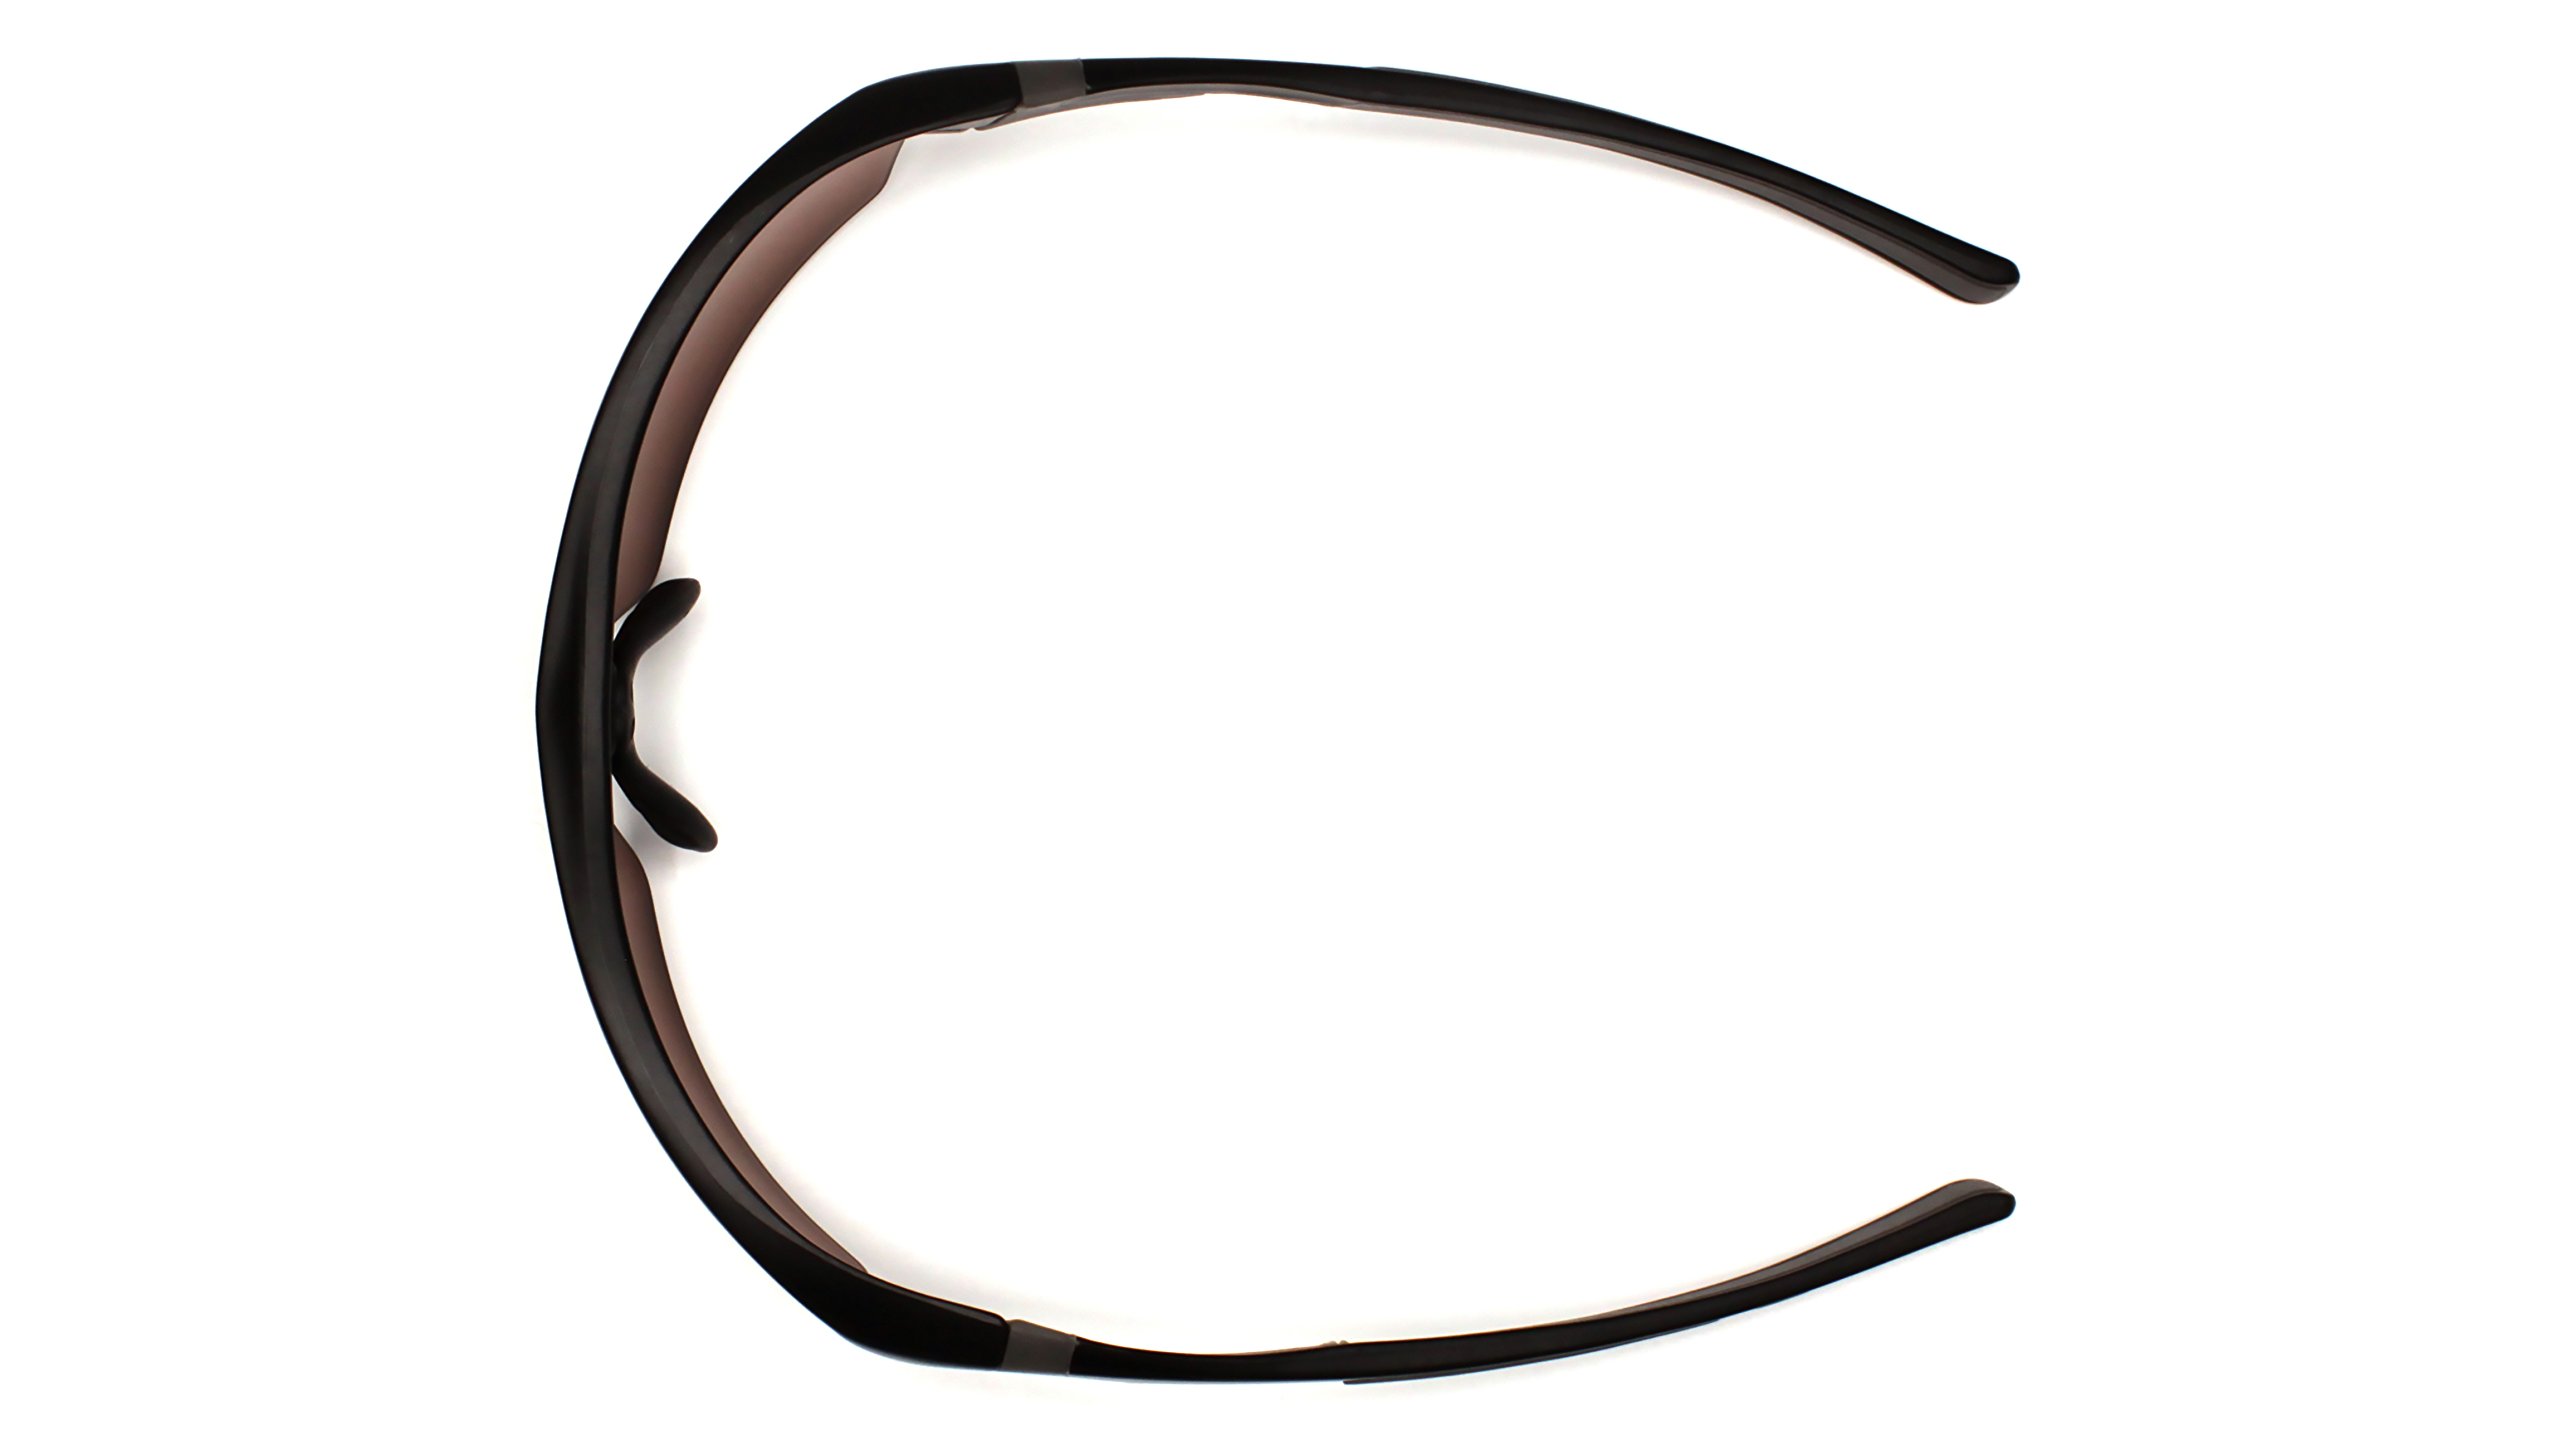 Venture Gear Tensaw Half-Frame High Performance Safety Eyewear